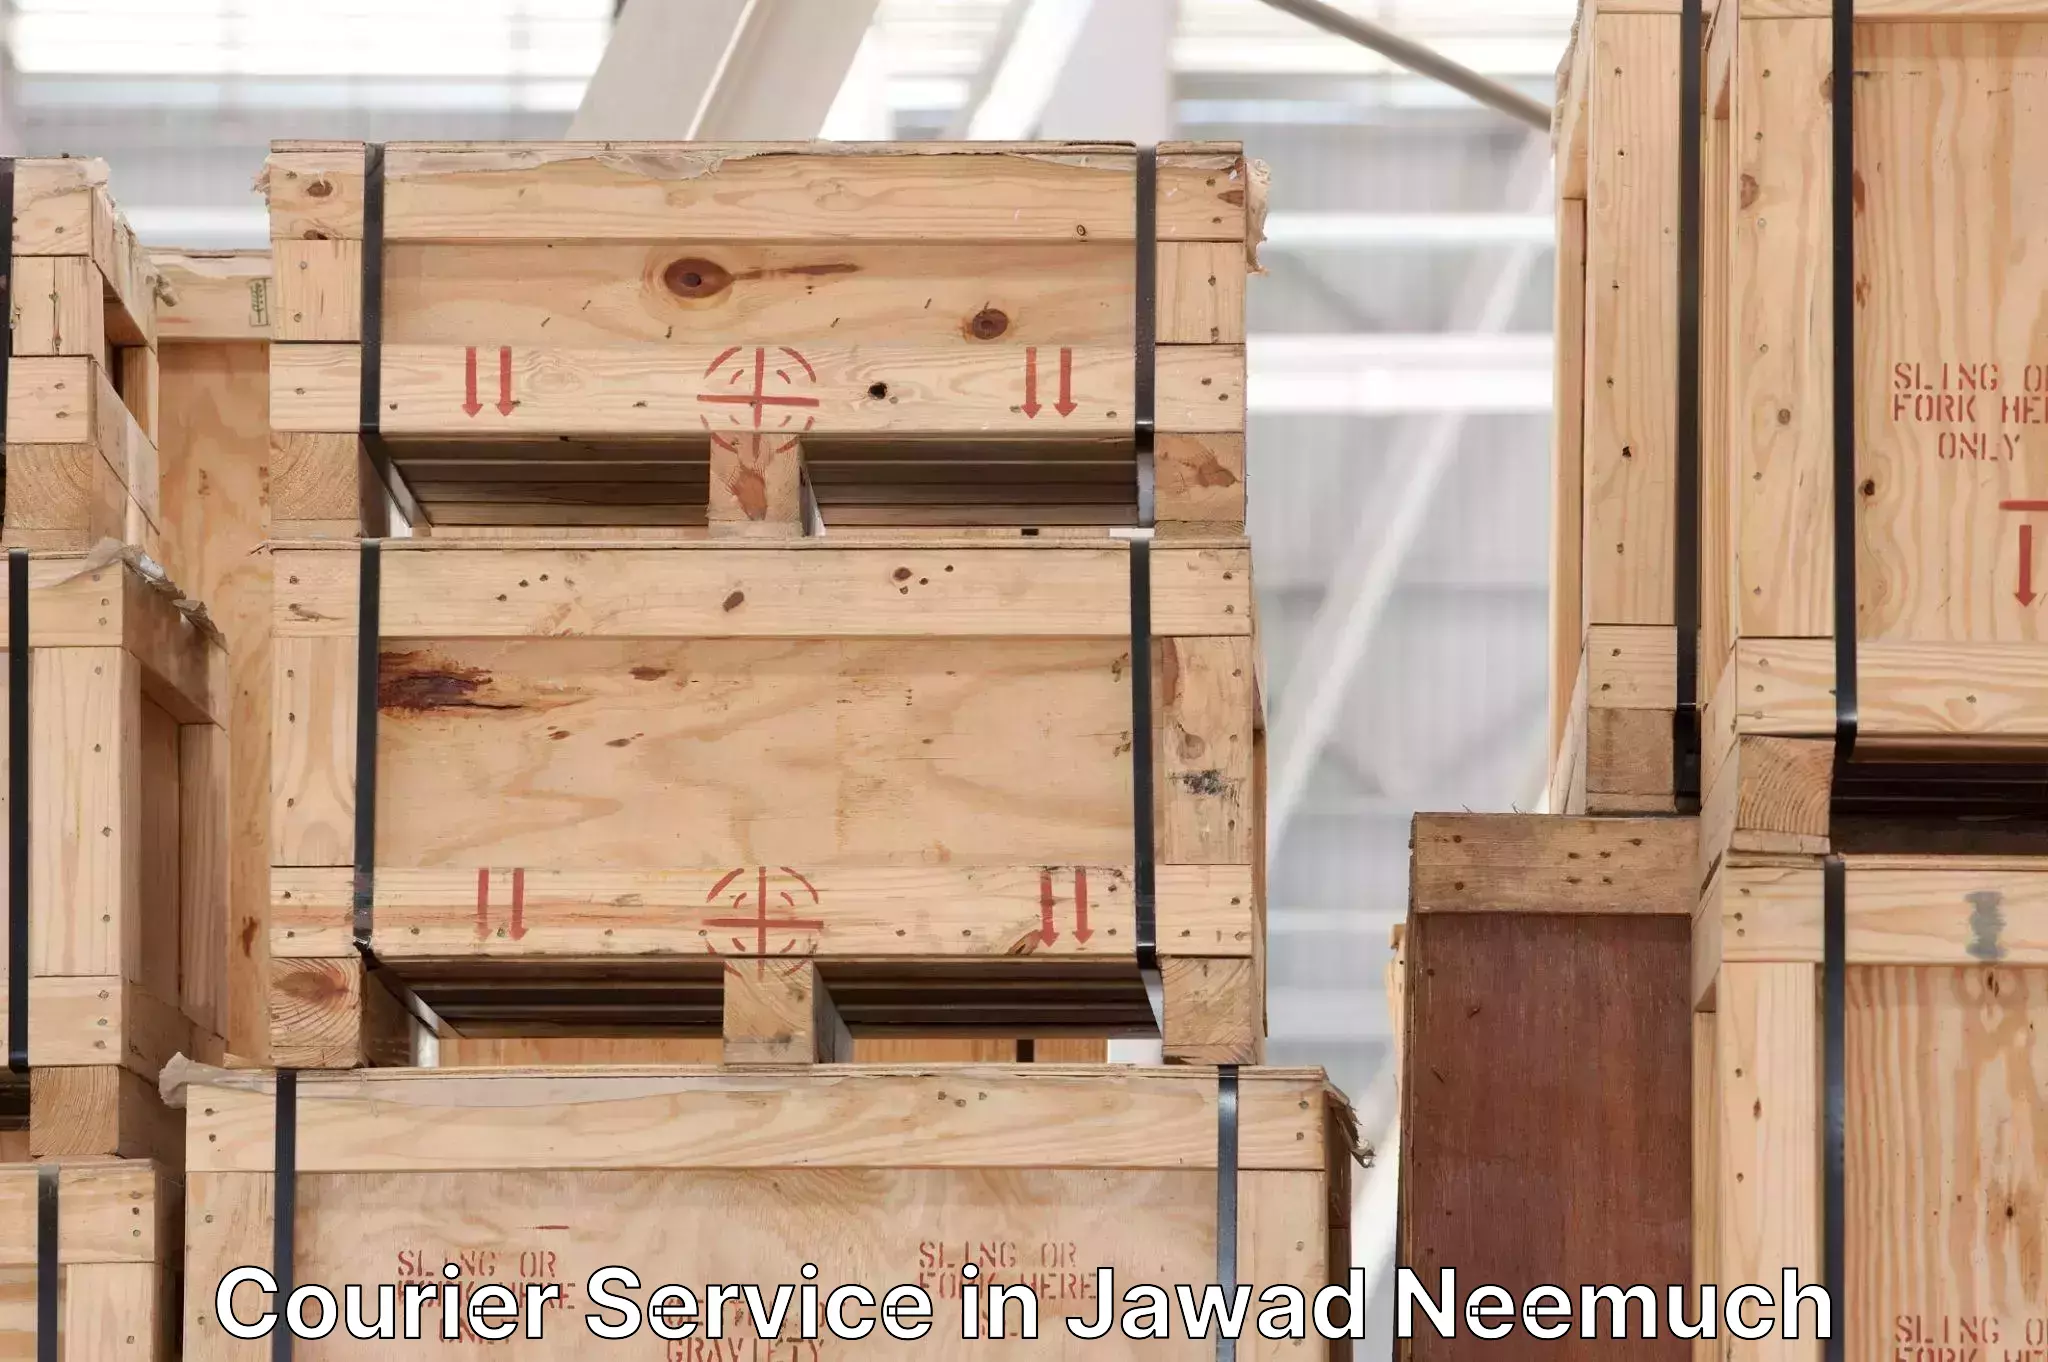 Express package handling in Jawad Neemuch